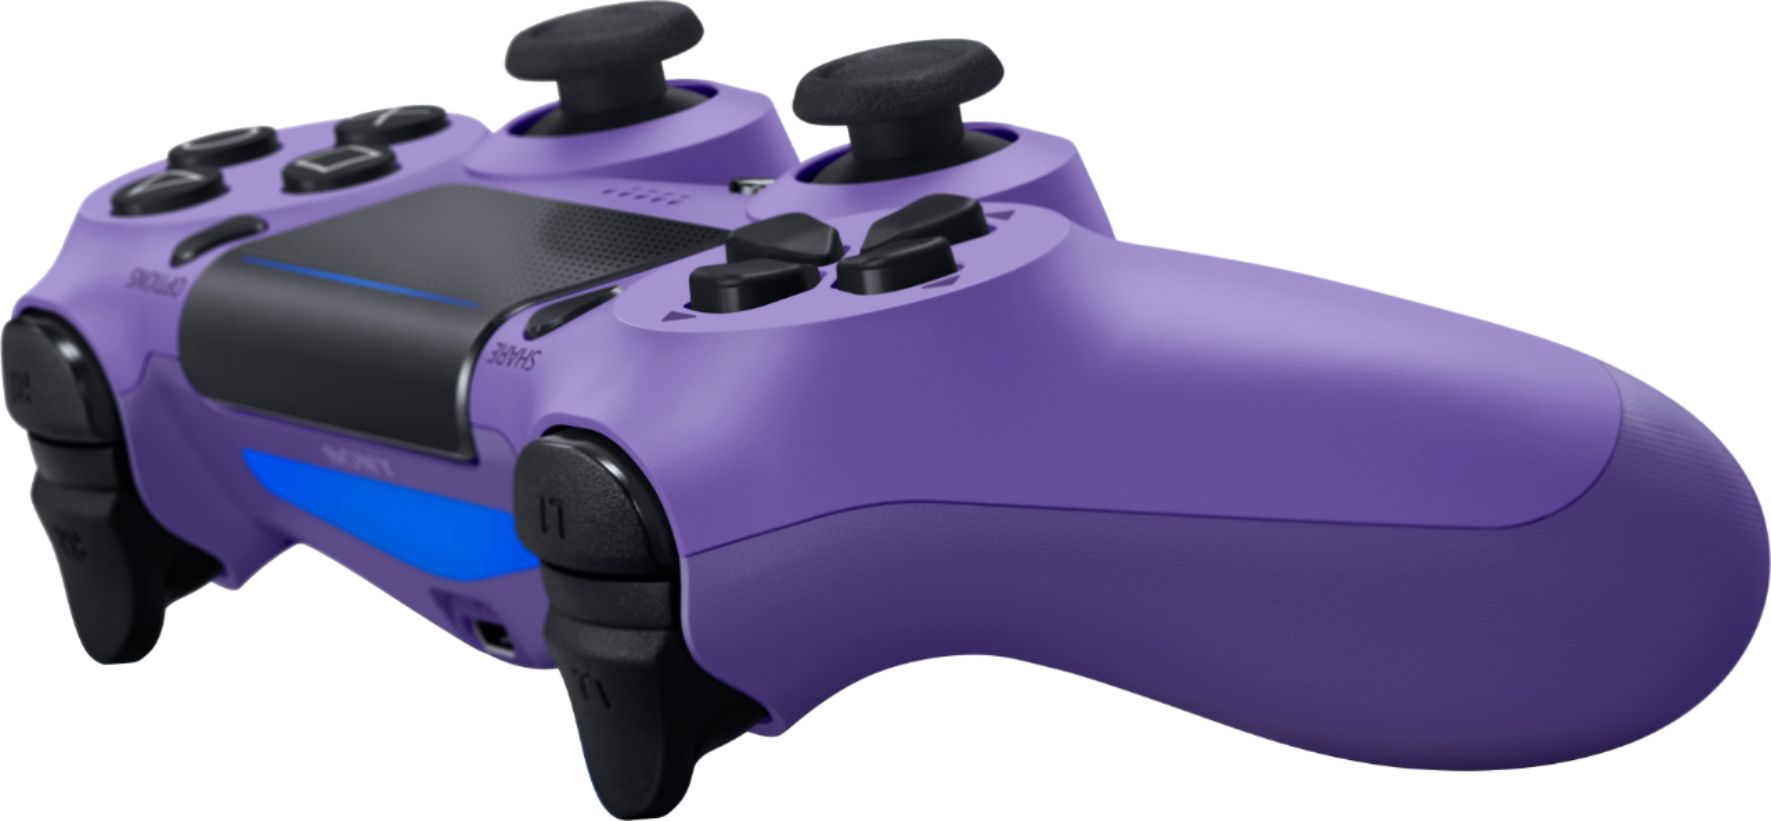 ps4 wireless controller purple